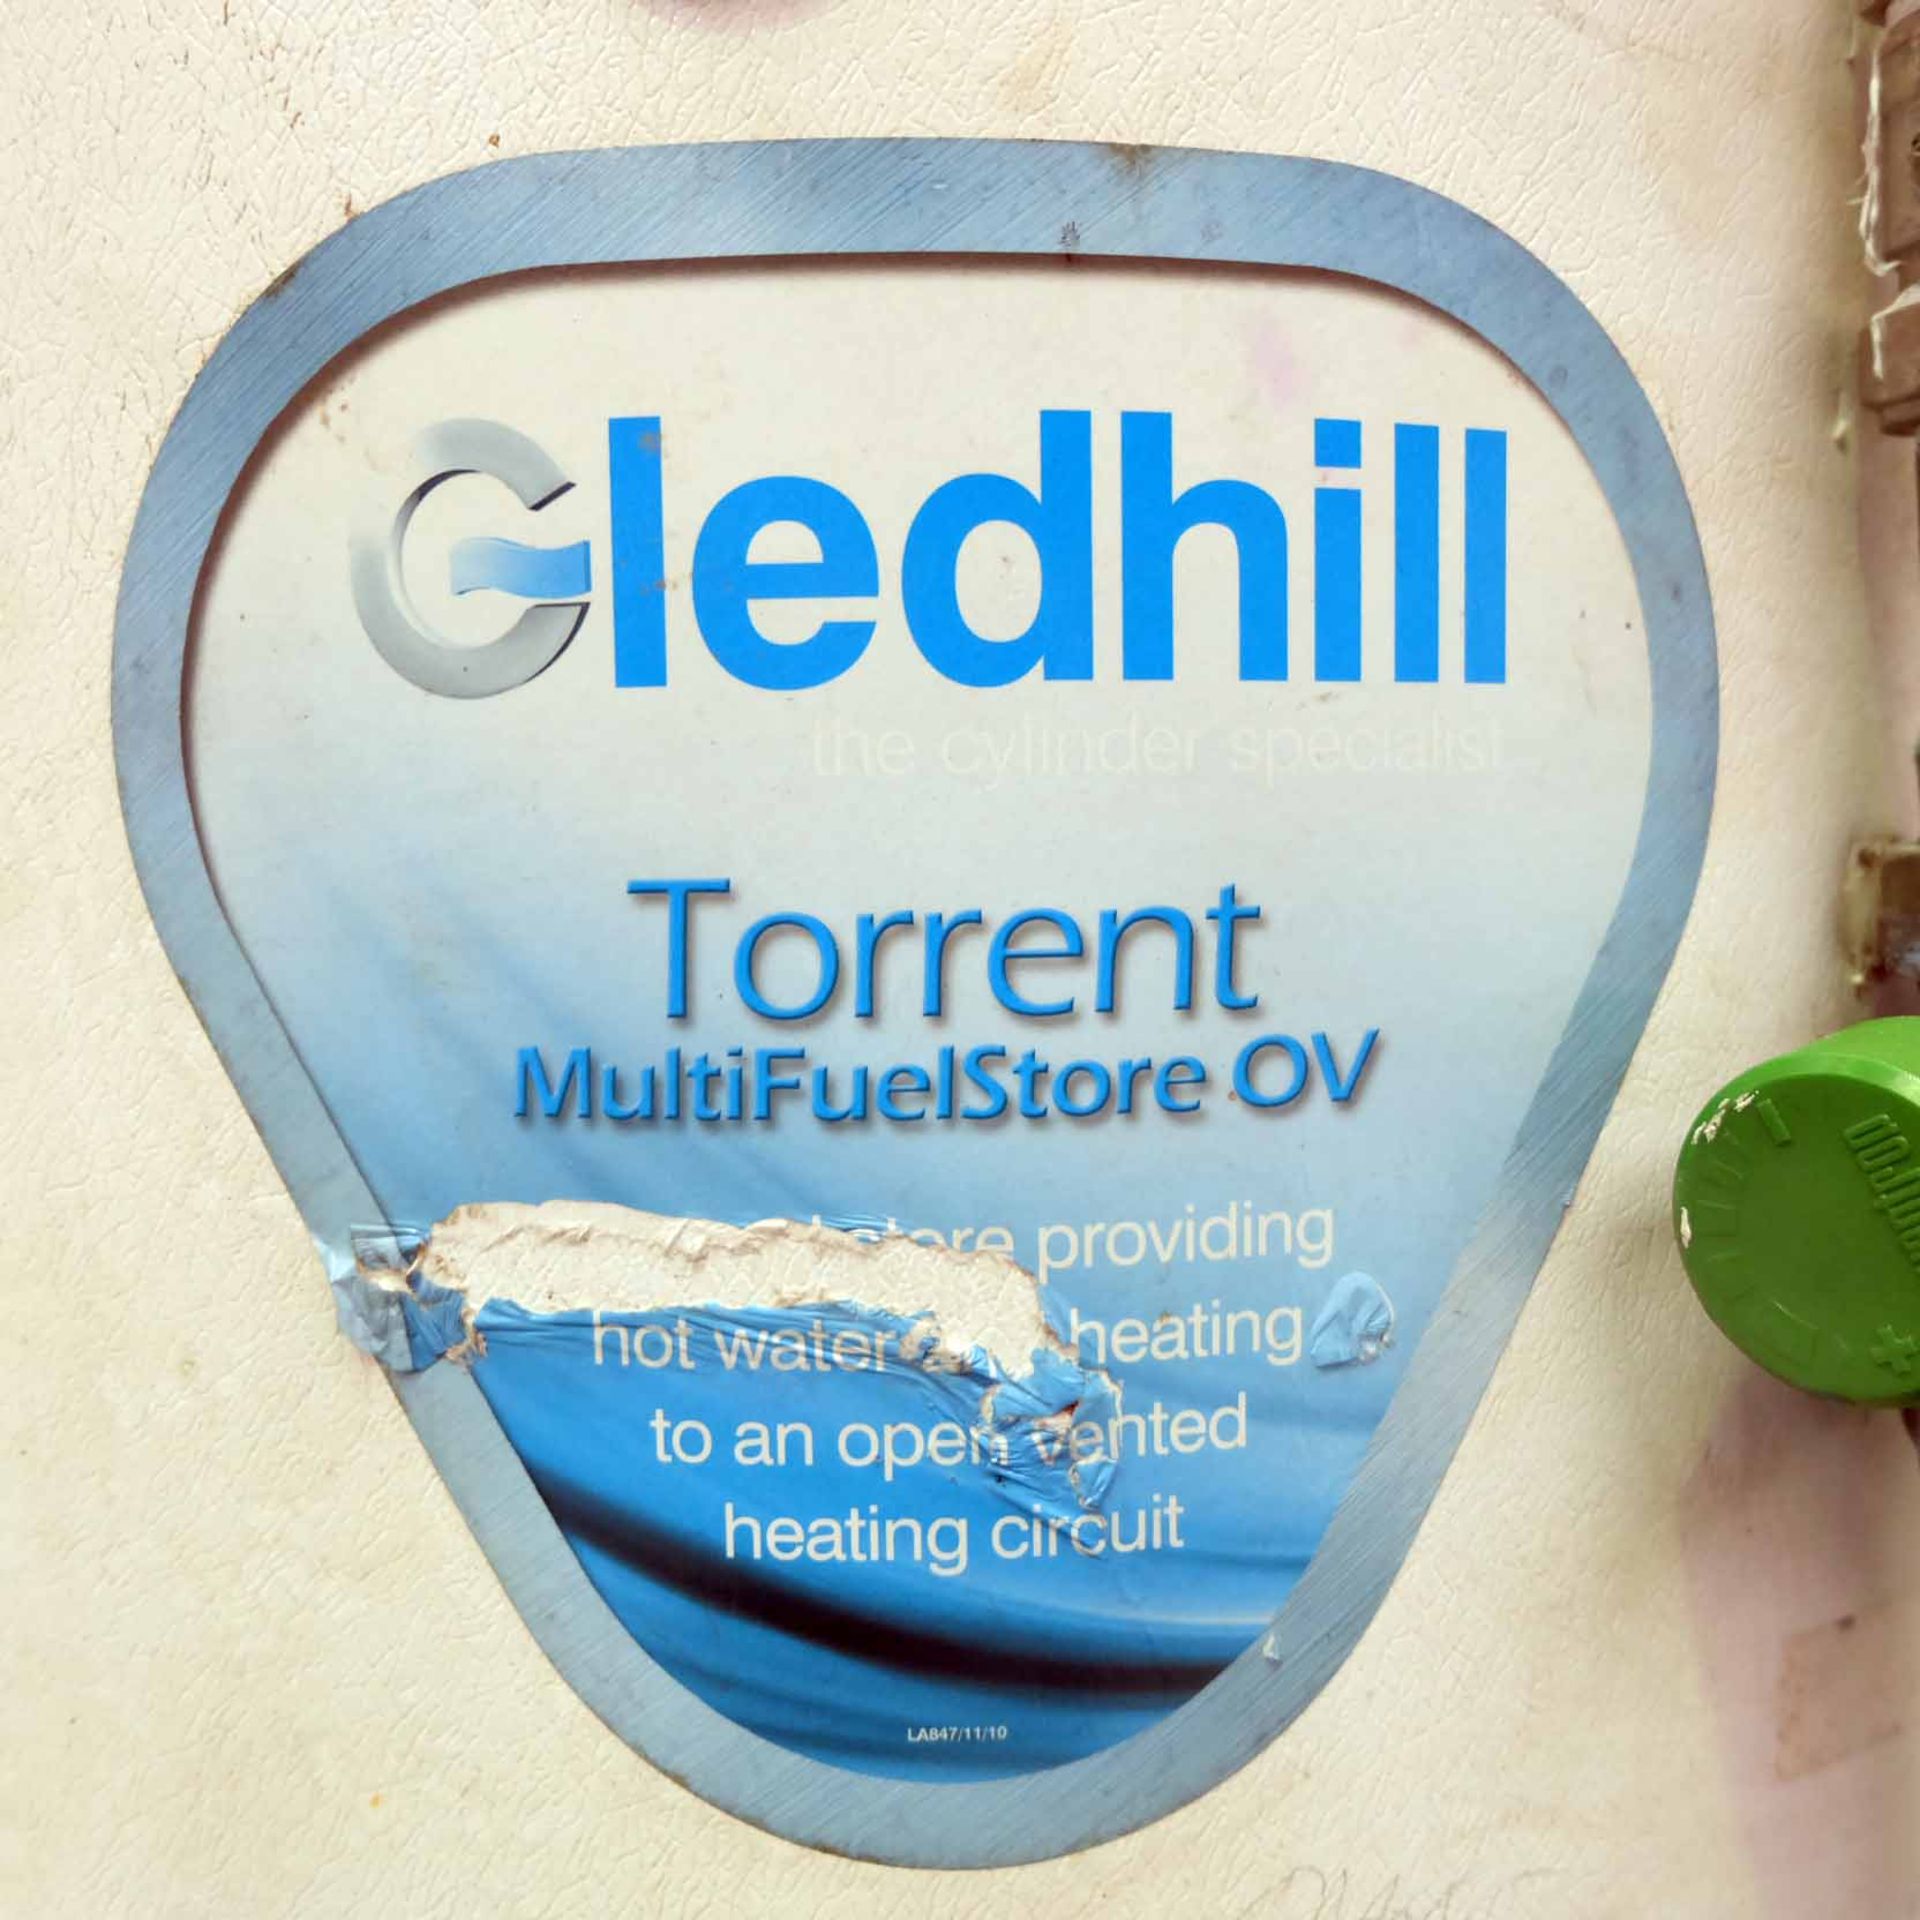 Gledhill Torrent Multifuel Store OV. - Image 6 of 12